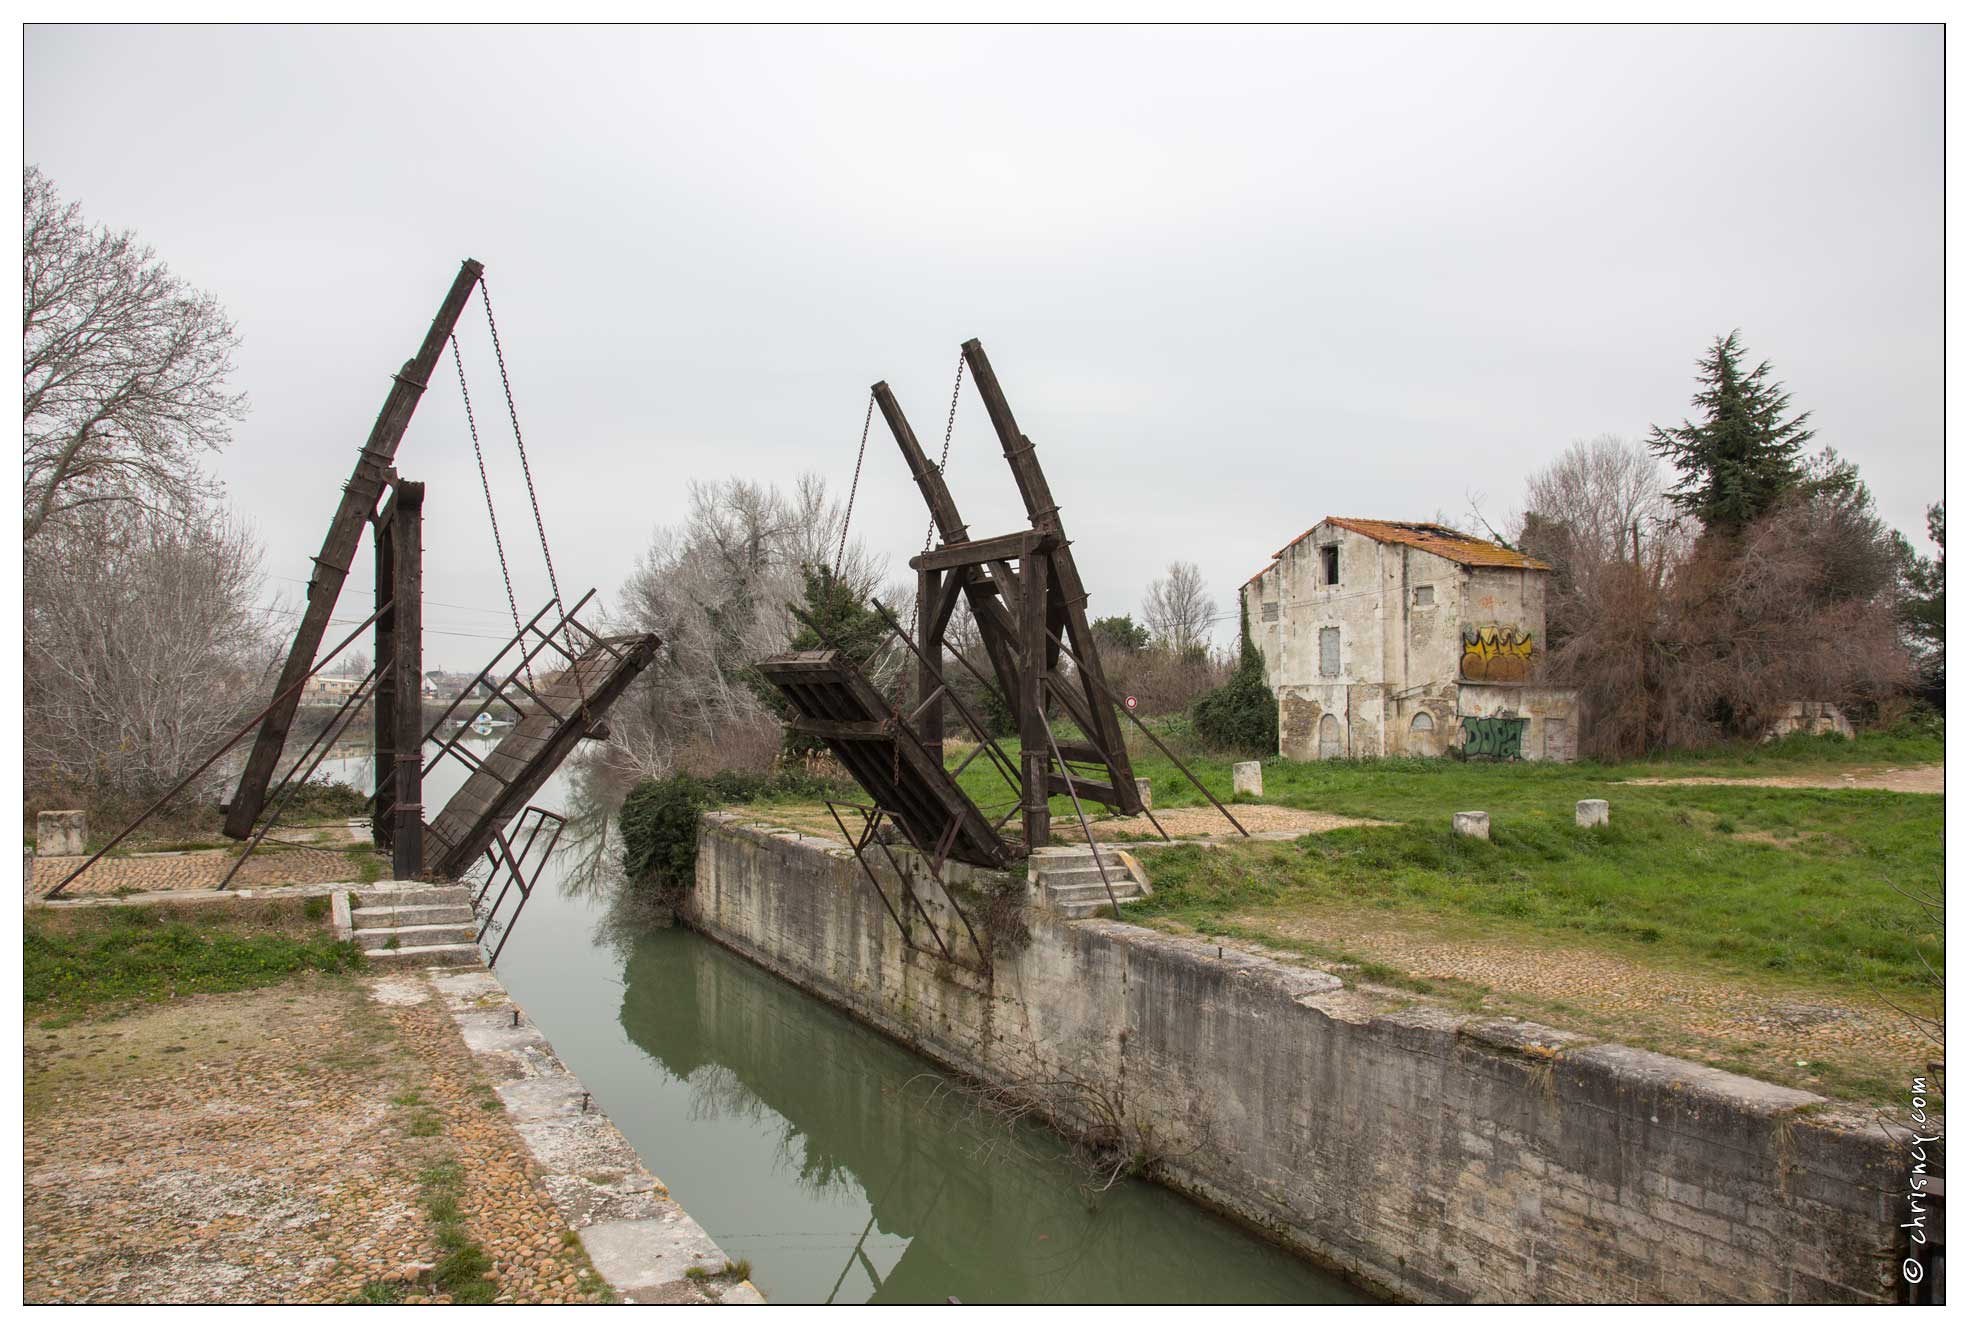 20160125-28_7109-Arles_Le_Pont_de_Langlois_Van_Gogh.jpg